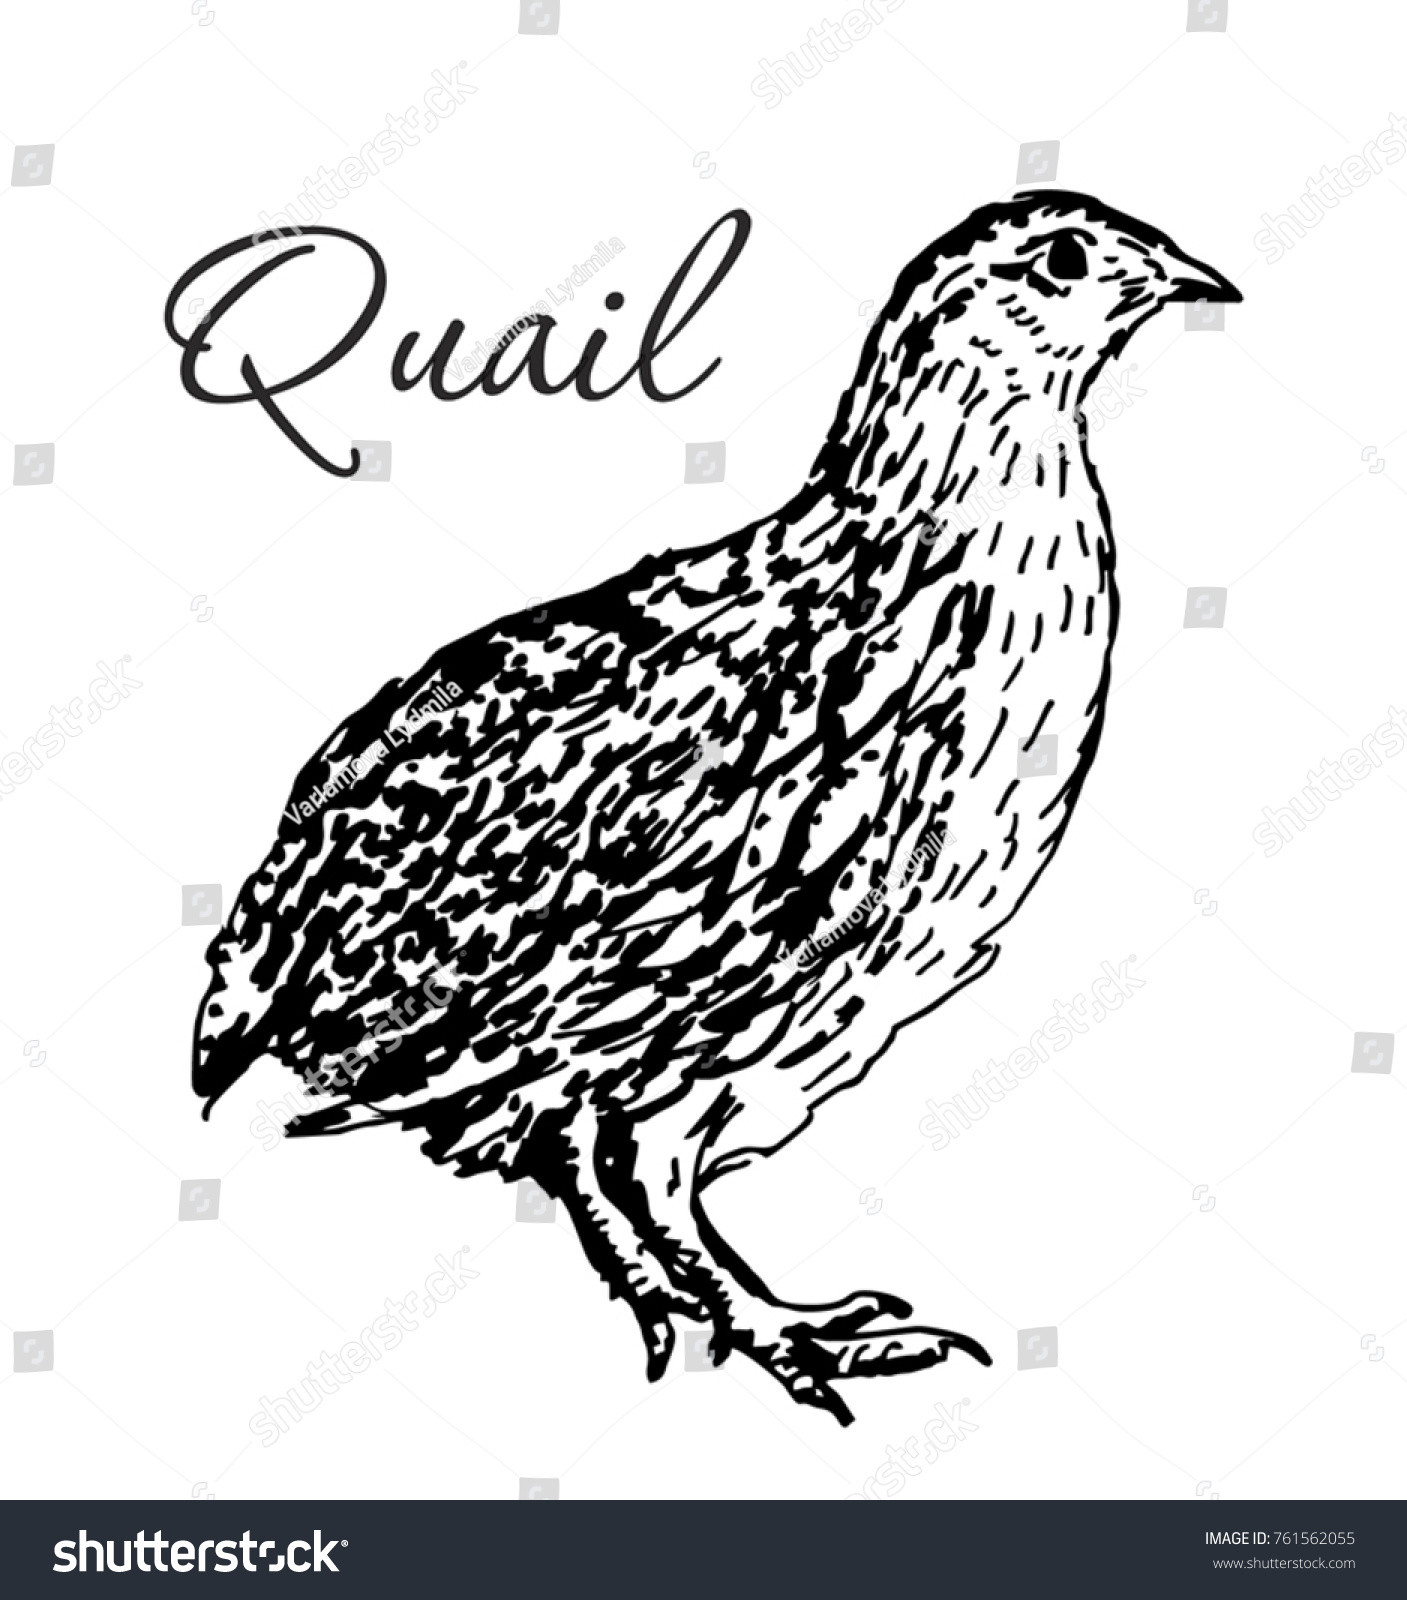 stock vector isolated quail bird engraved art organic sketched farming birds use for restaurant menu